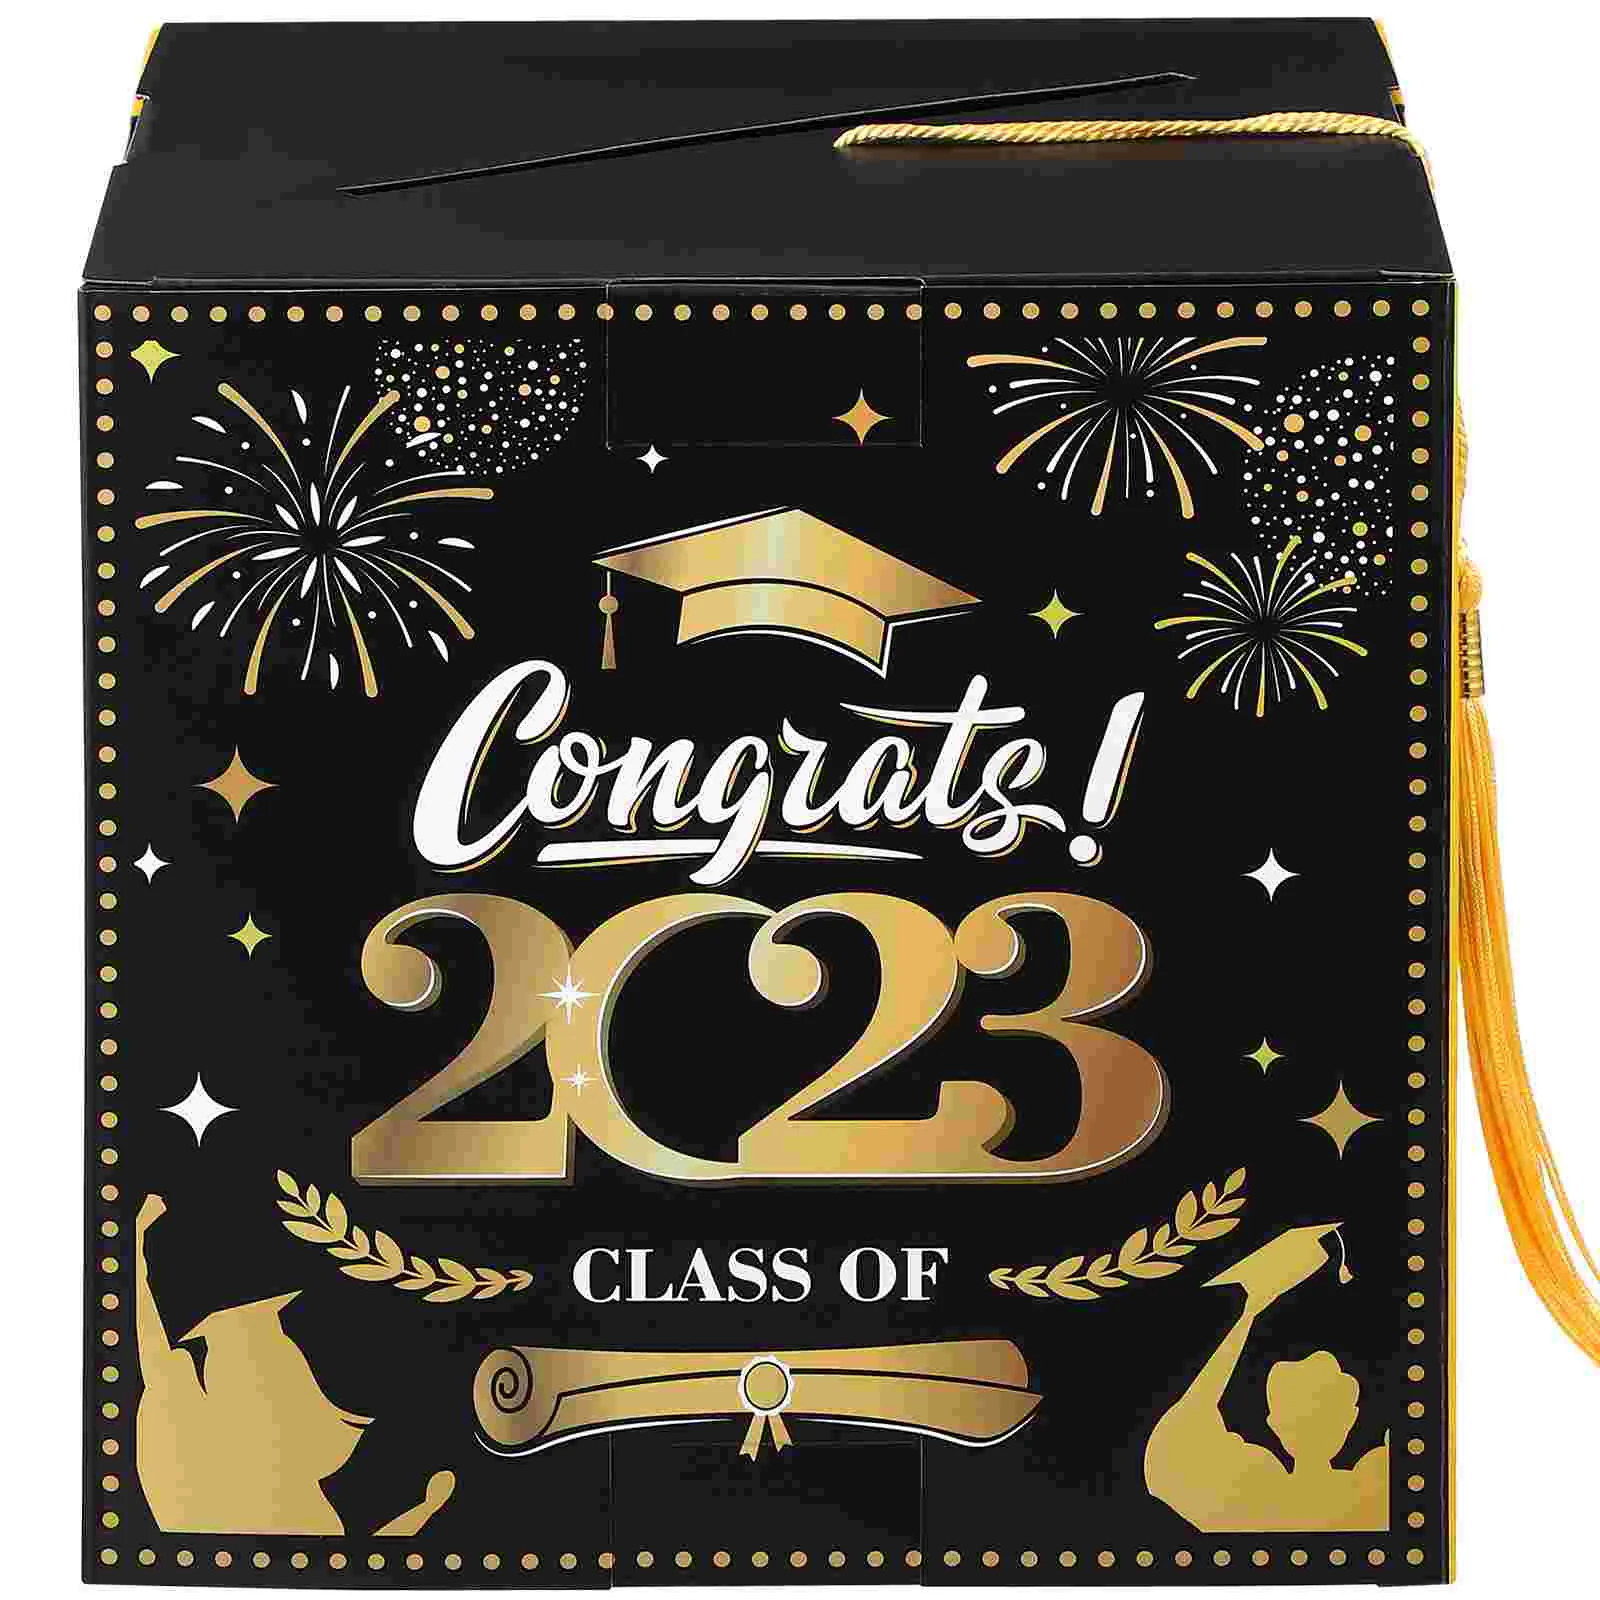 

Box Graduation Grad Holder Party Gift Congrats Boxes Decorations Advice Supplies Invitation Graduate Black Congrates Favors